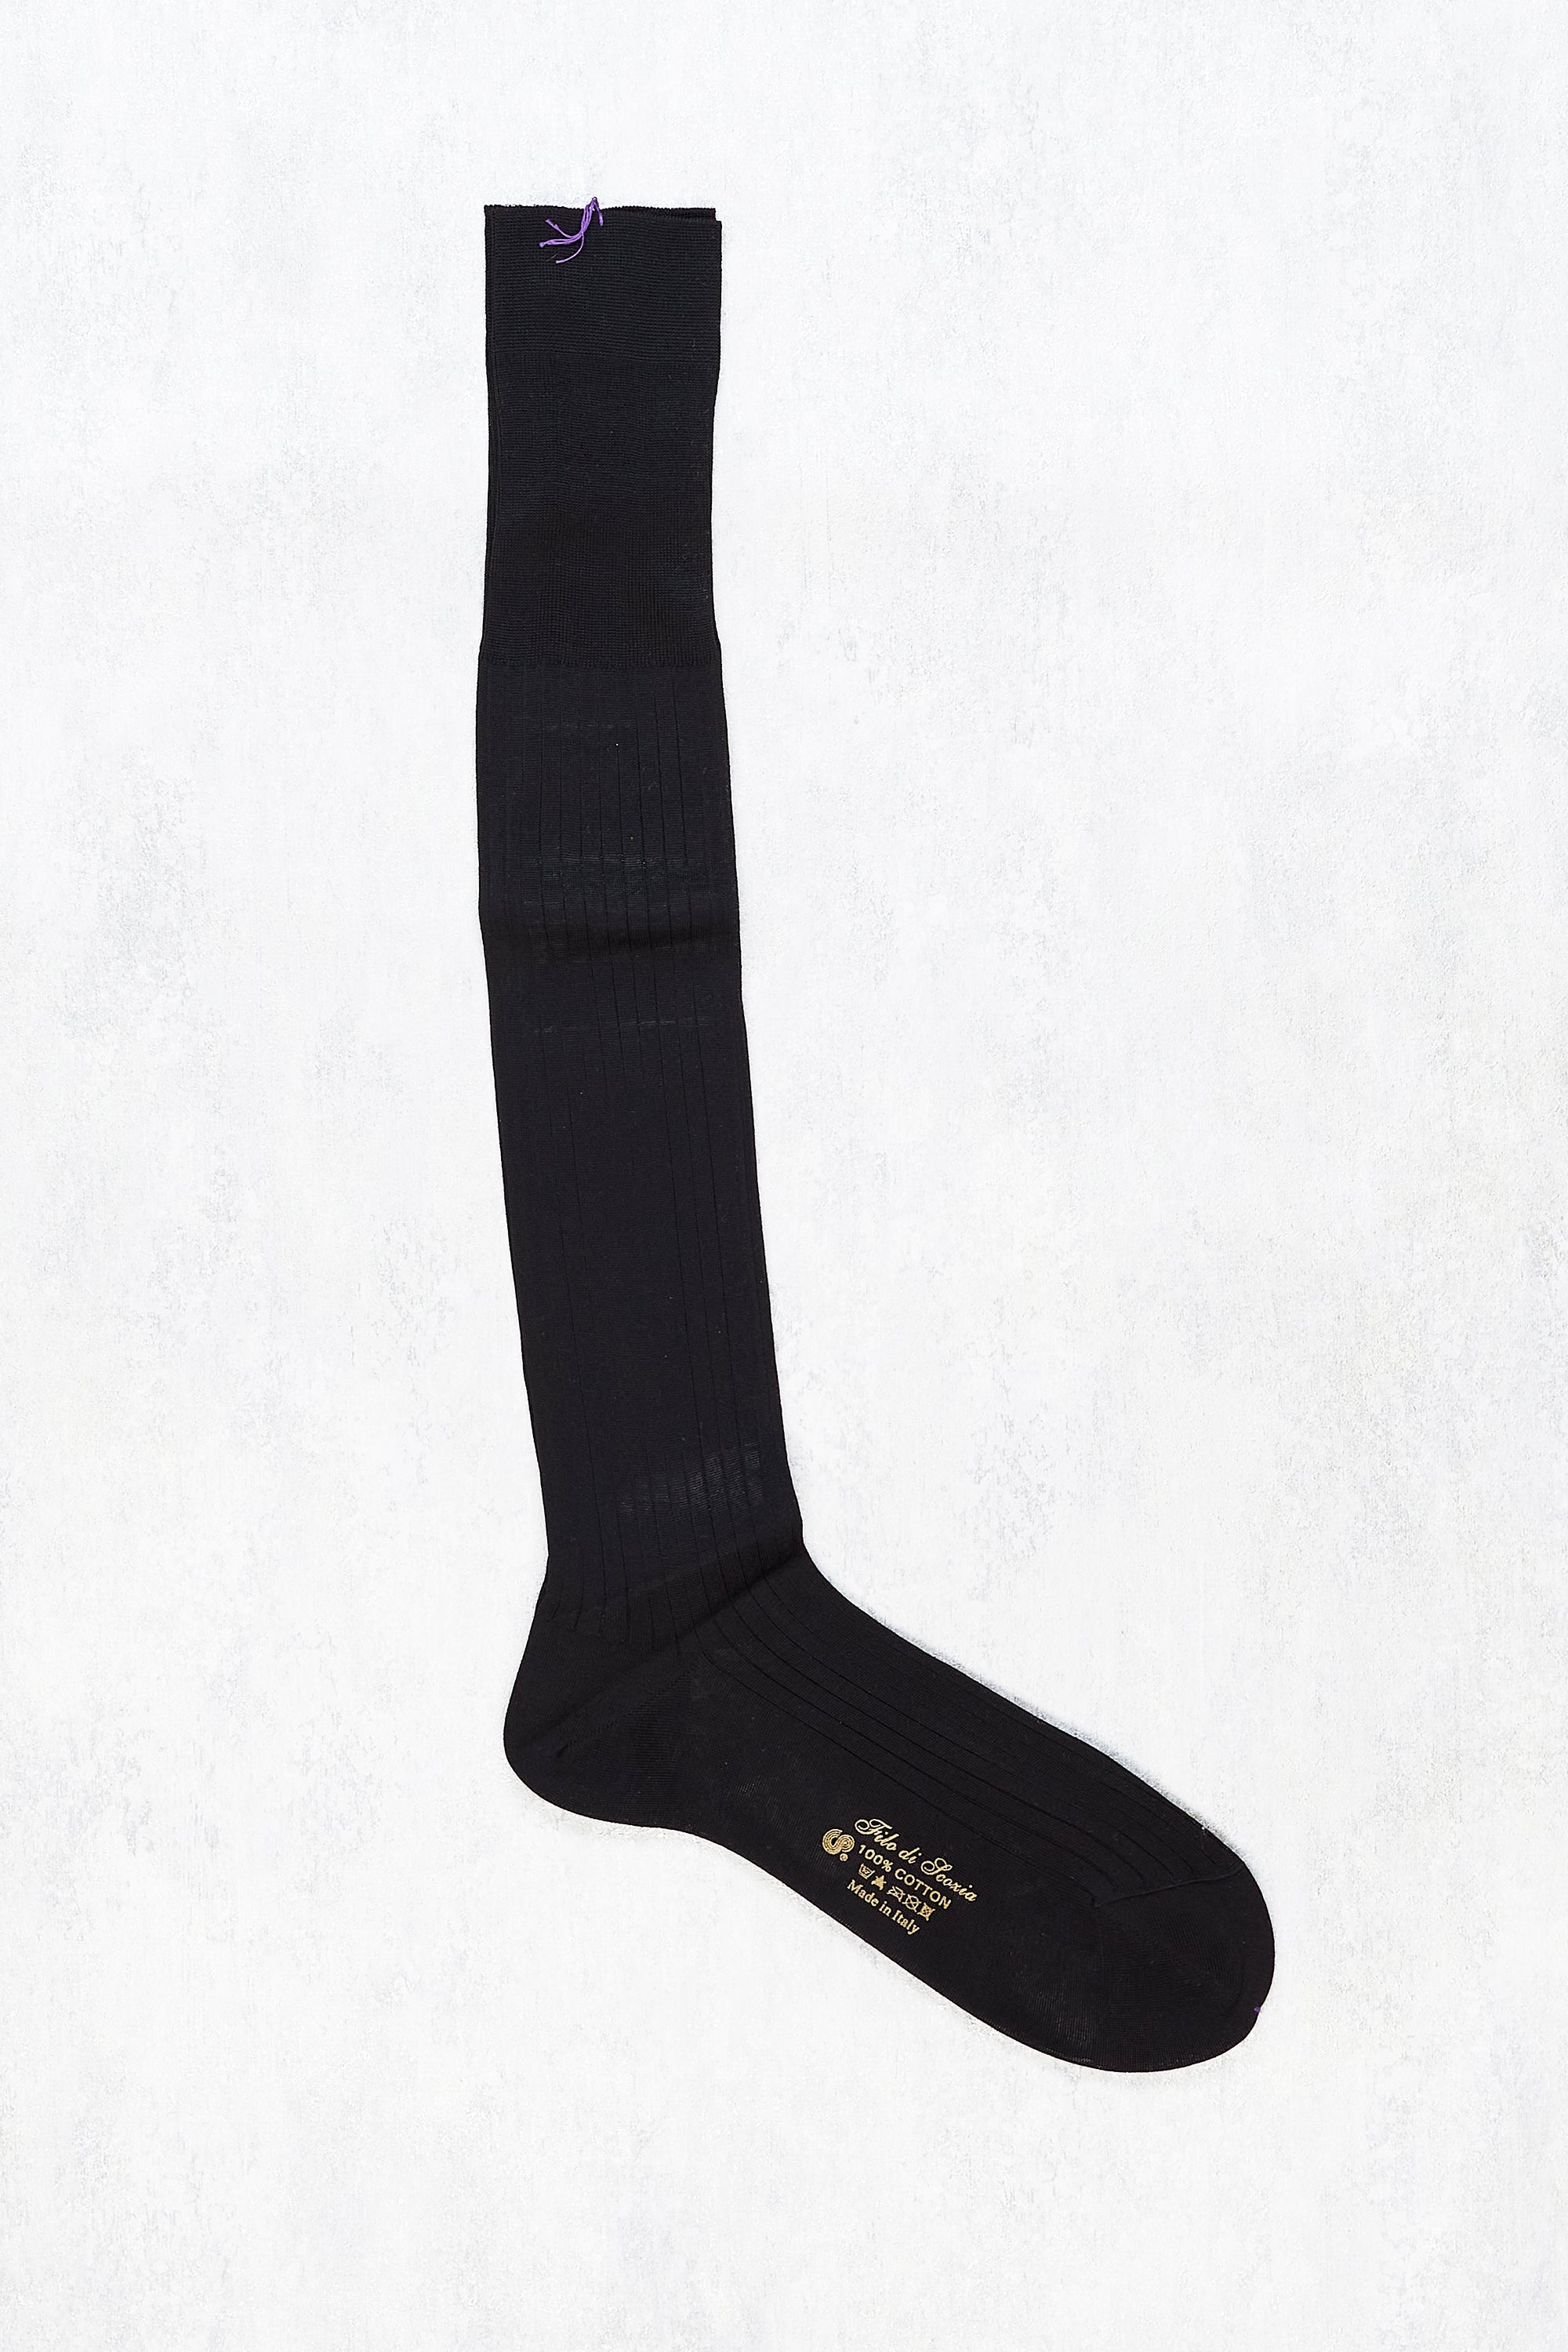 Drake's Black Cotton Long Socks